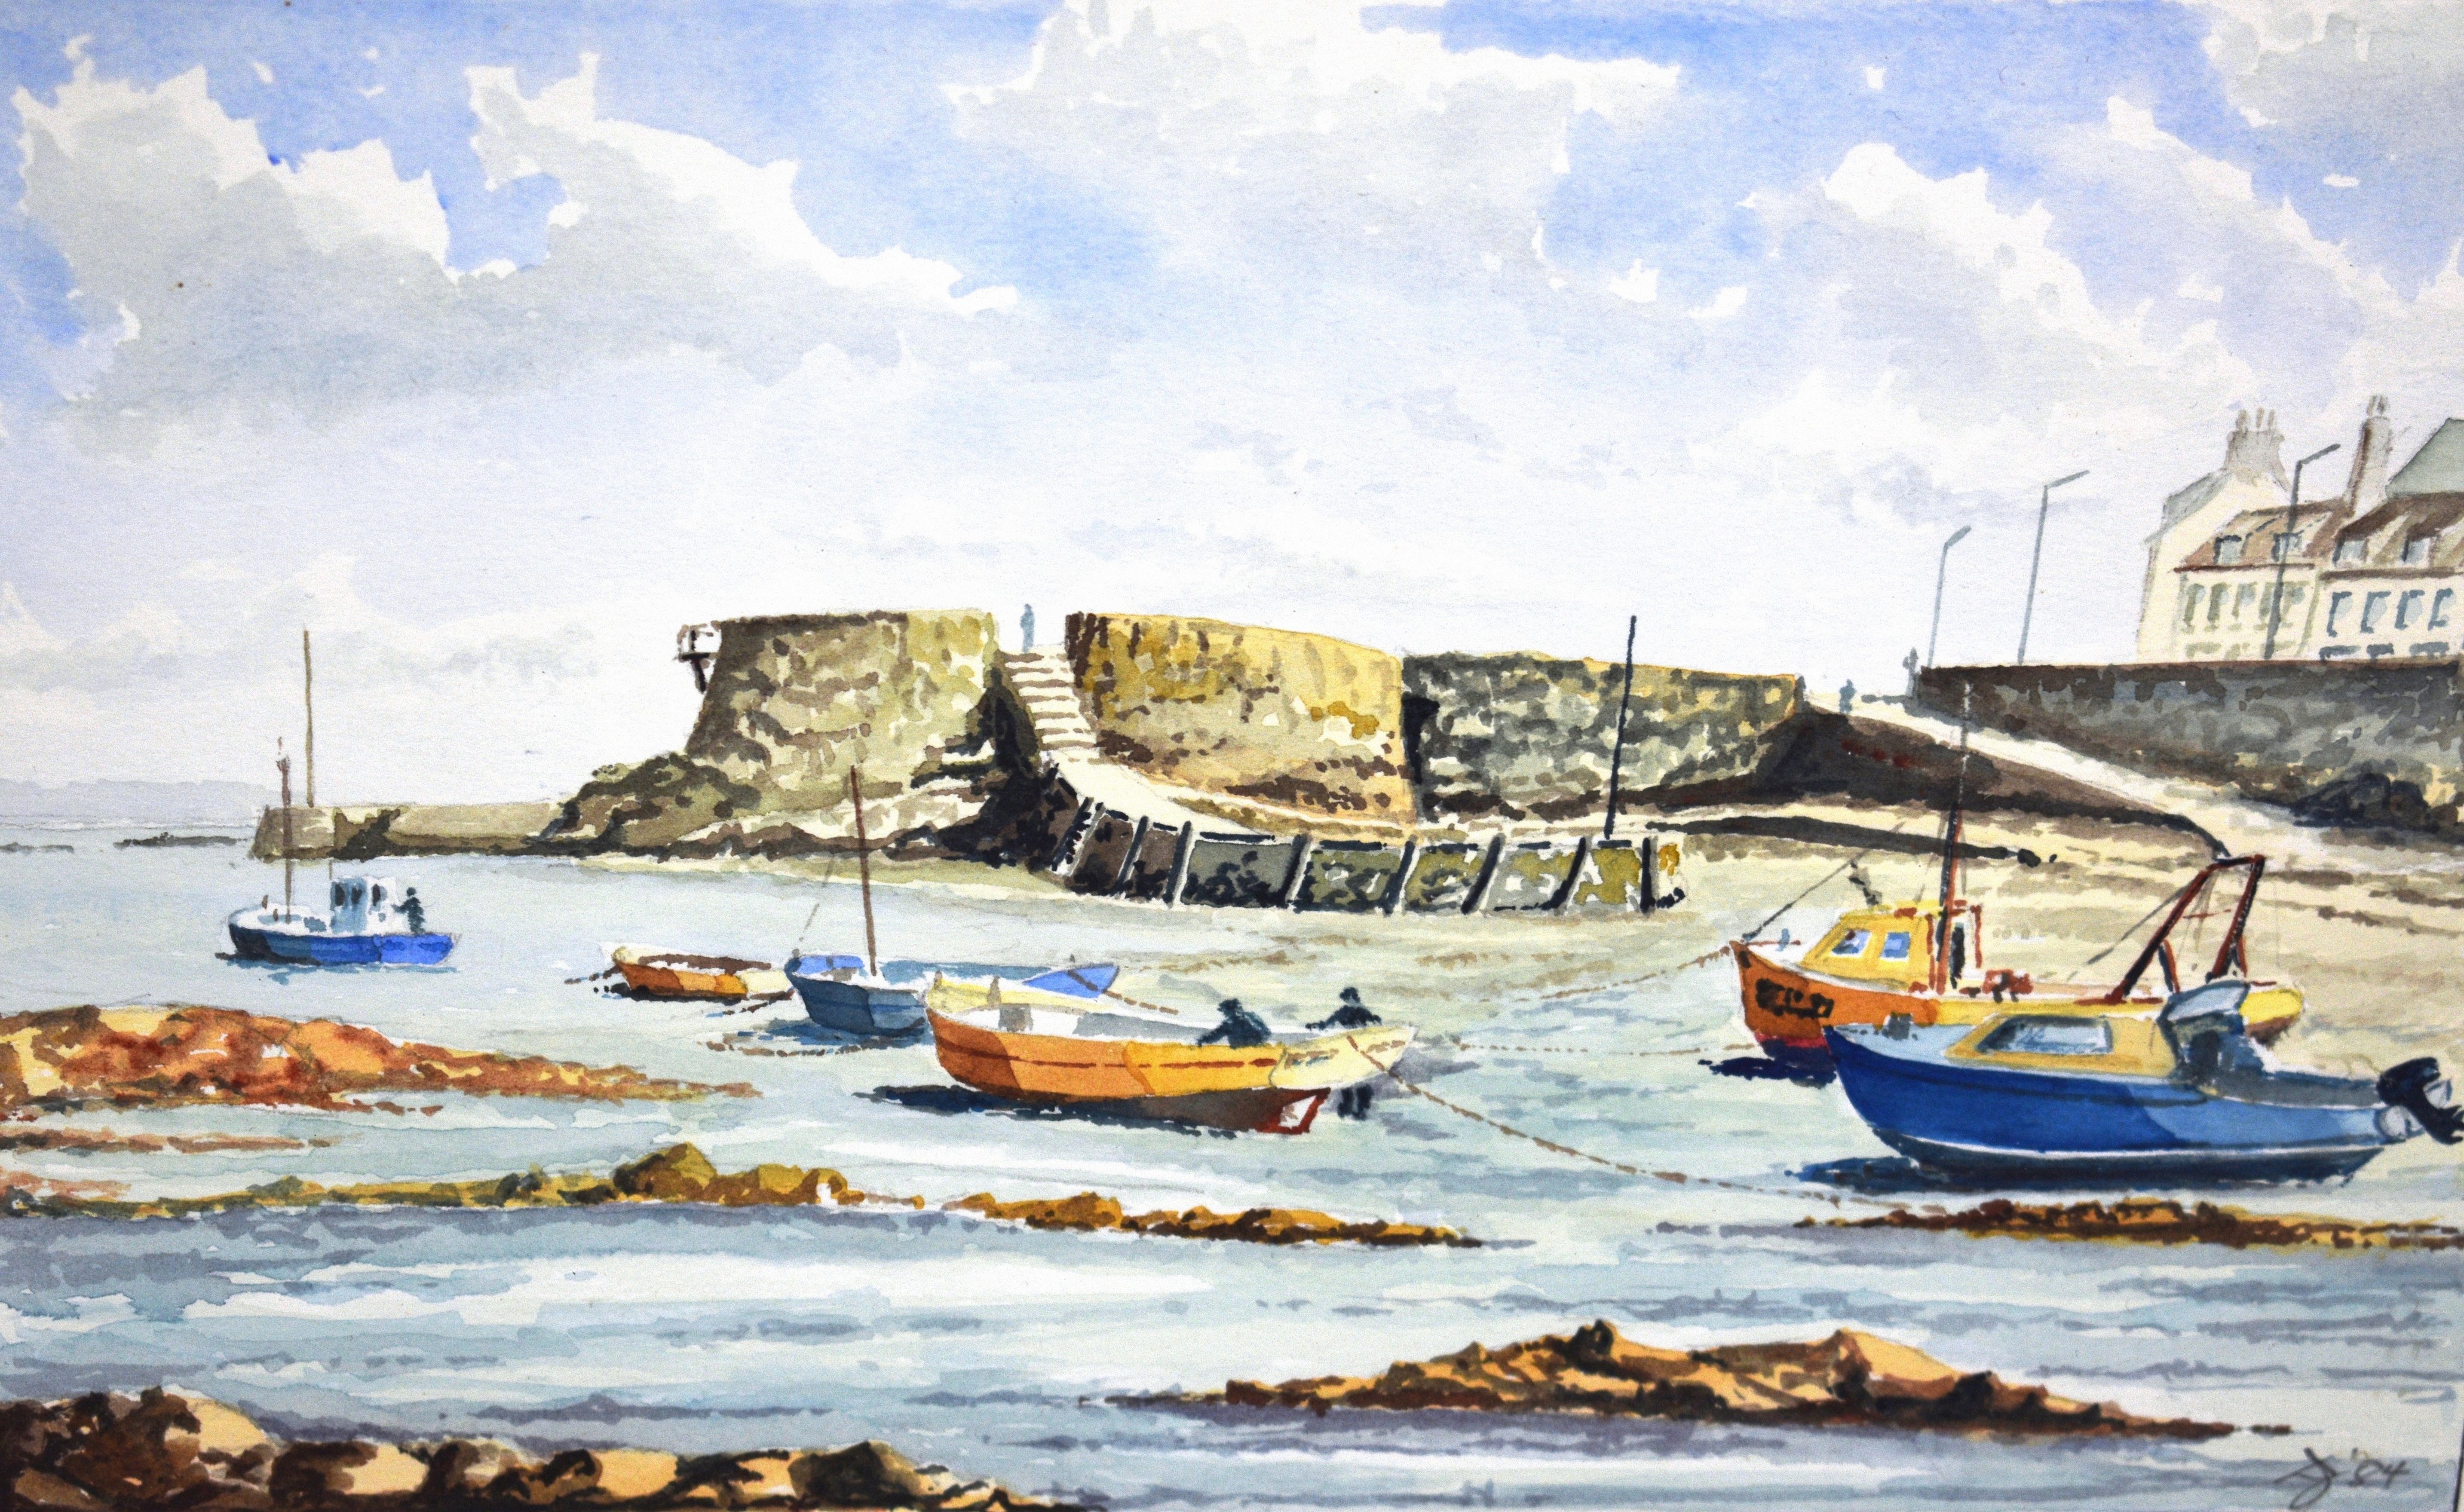 David Jory watercolour - Low tide at Salerie Harbour, St Peter Port